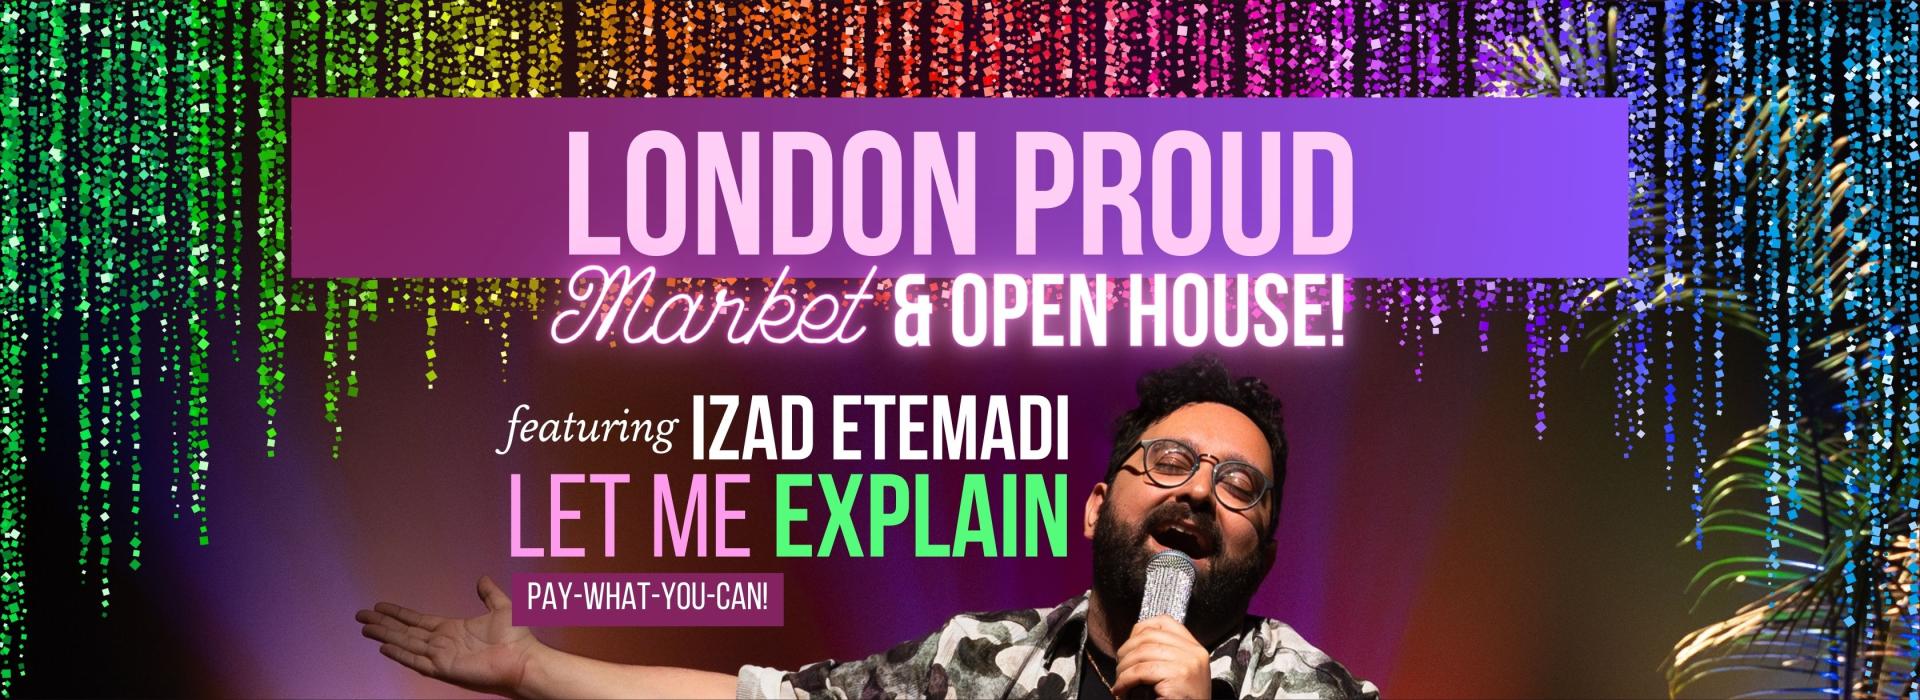 London Proud Market & Open House